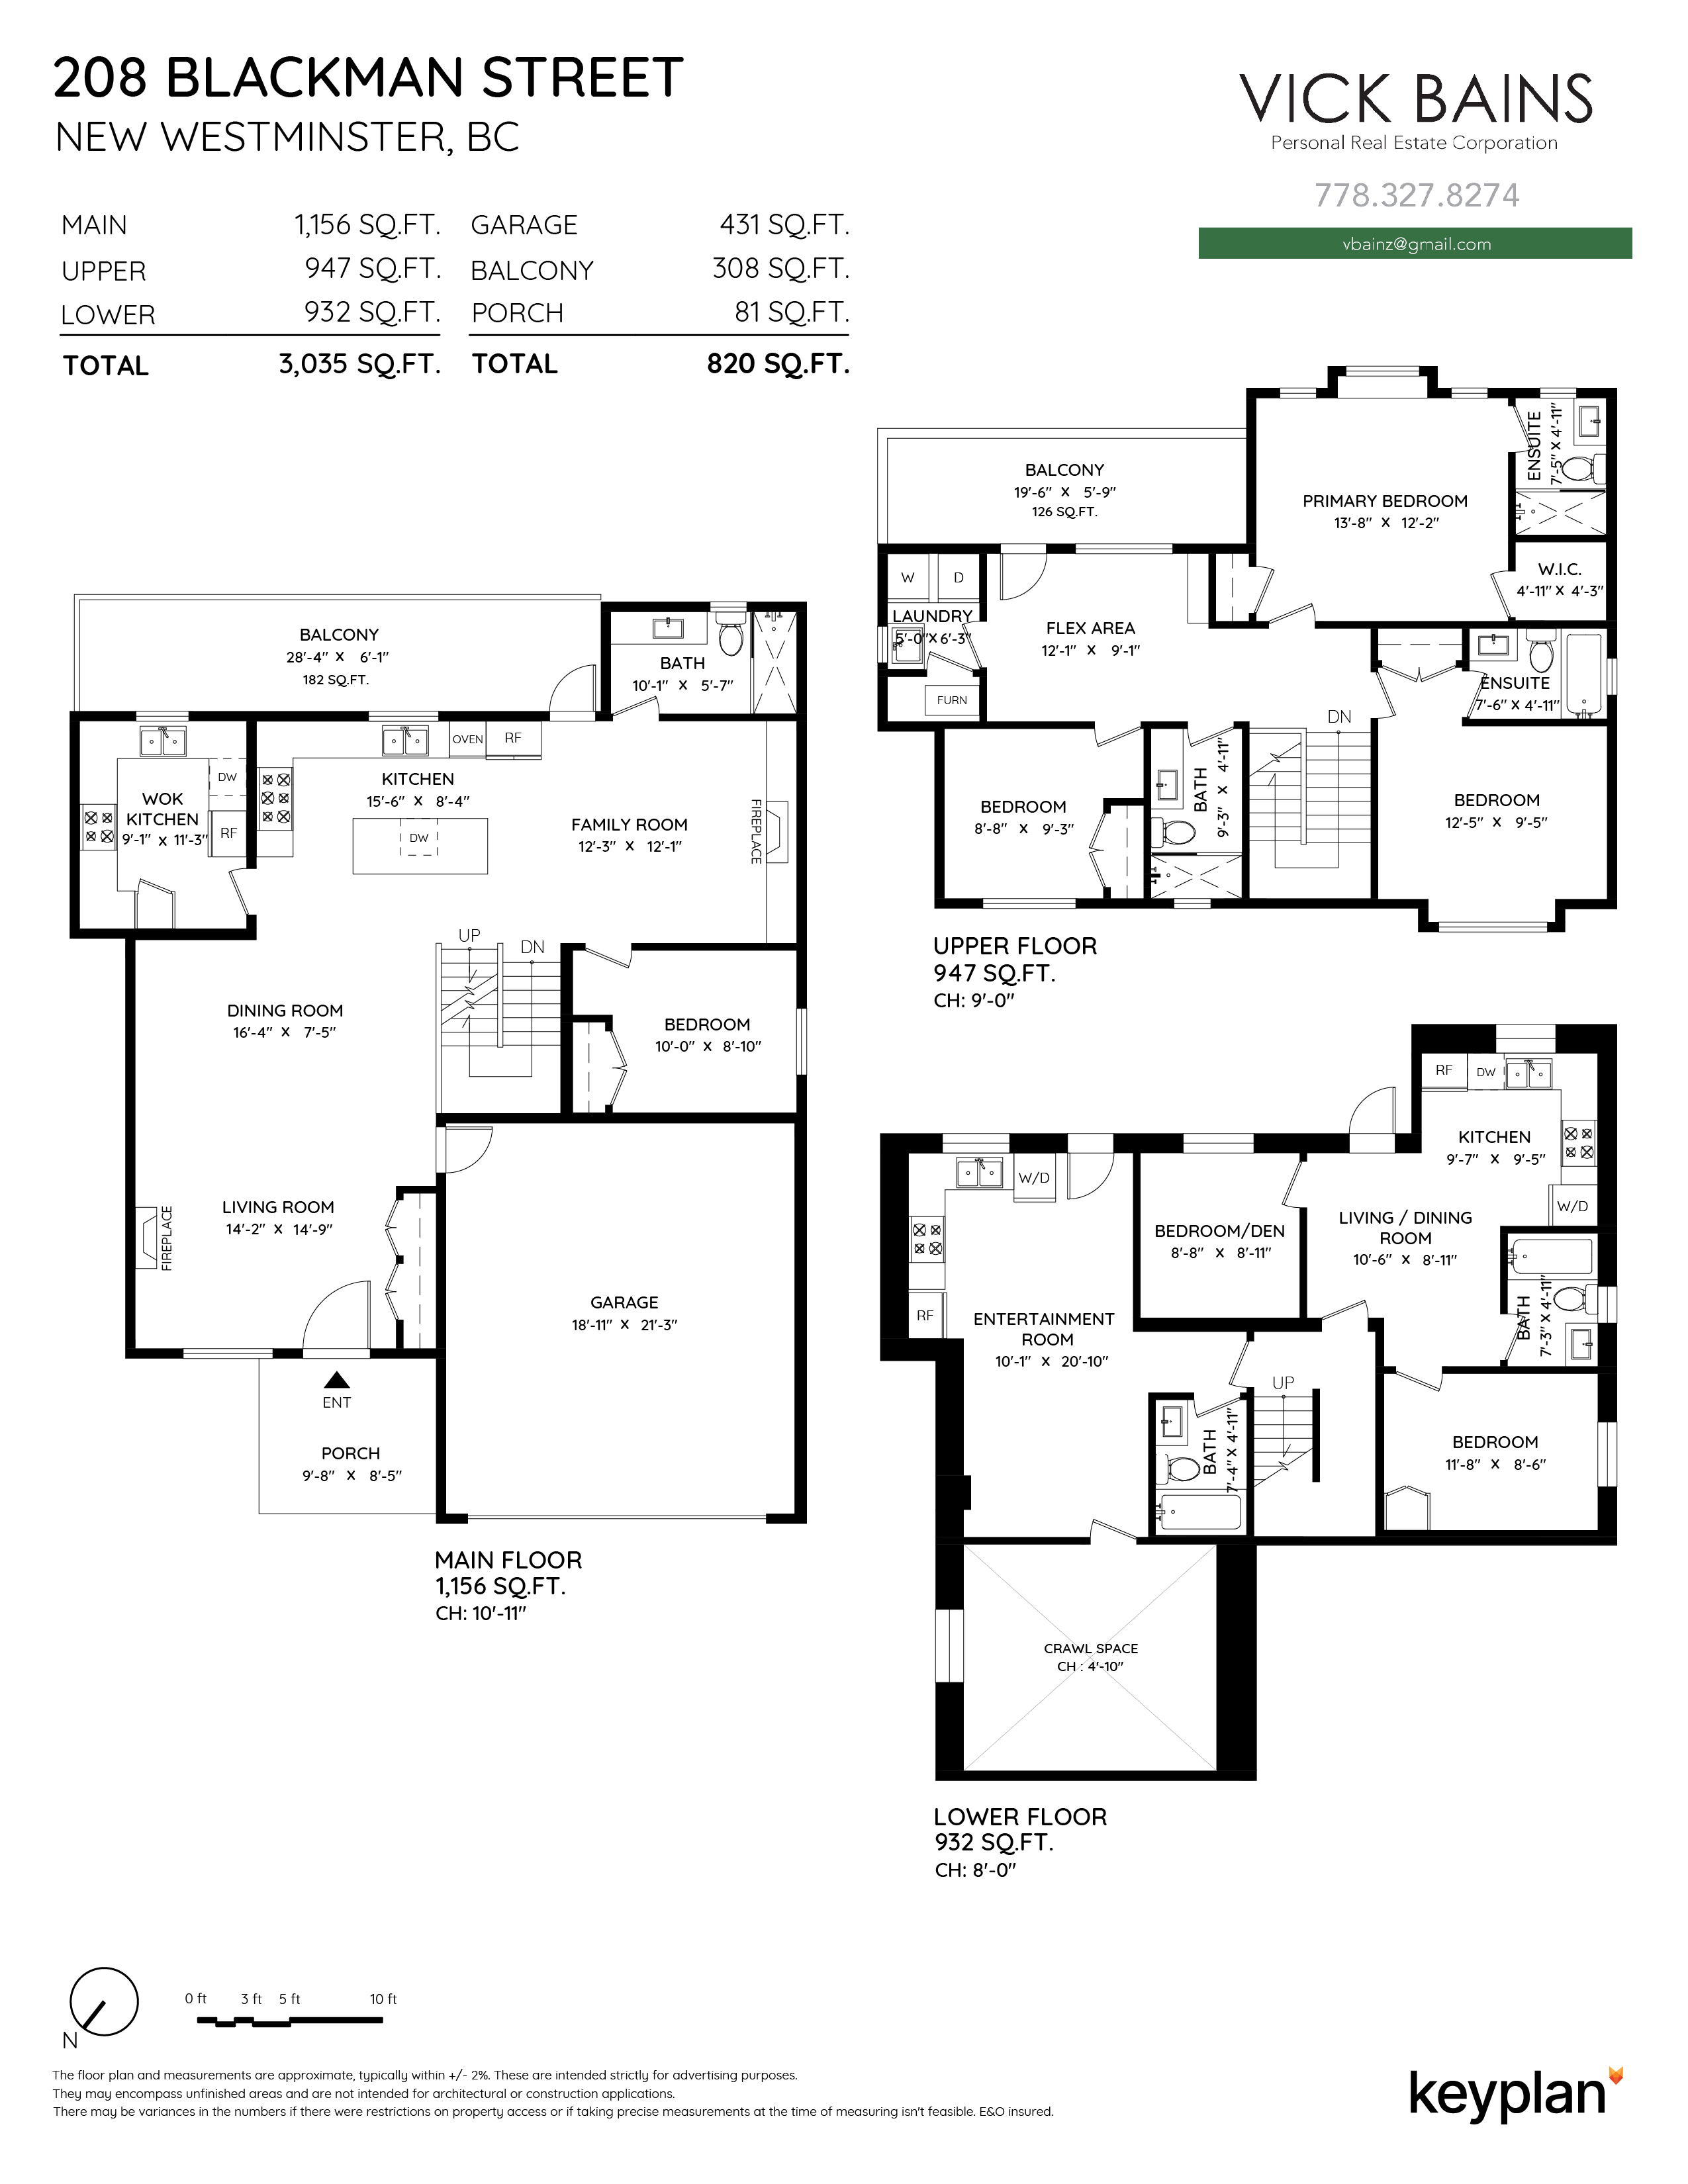 Vick Bains - 208 Blackman Street, New Westminster, BC, Canada | Floor Plan 1